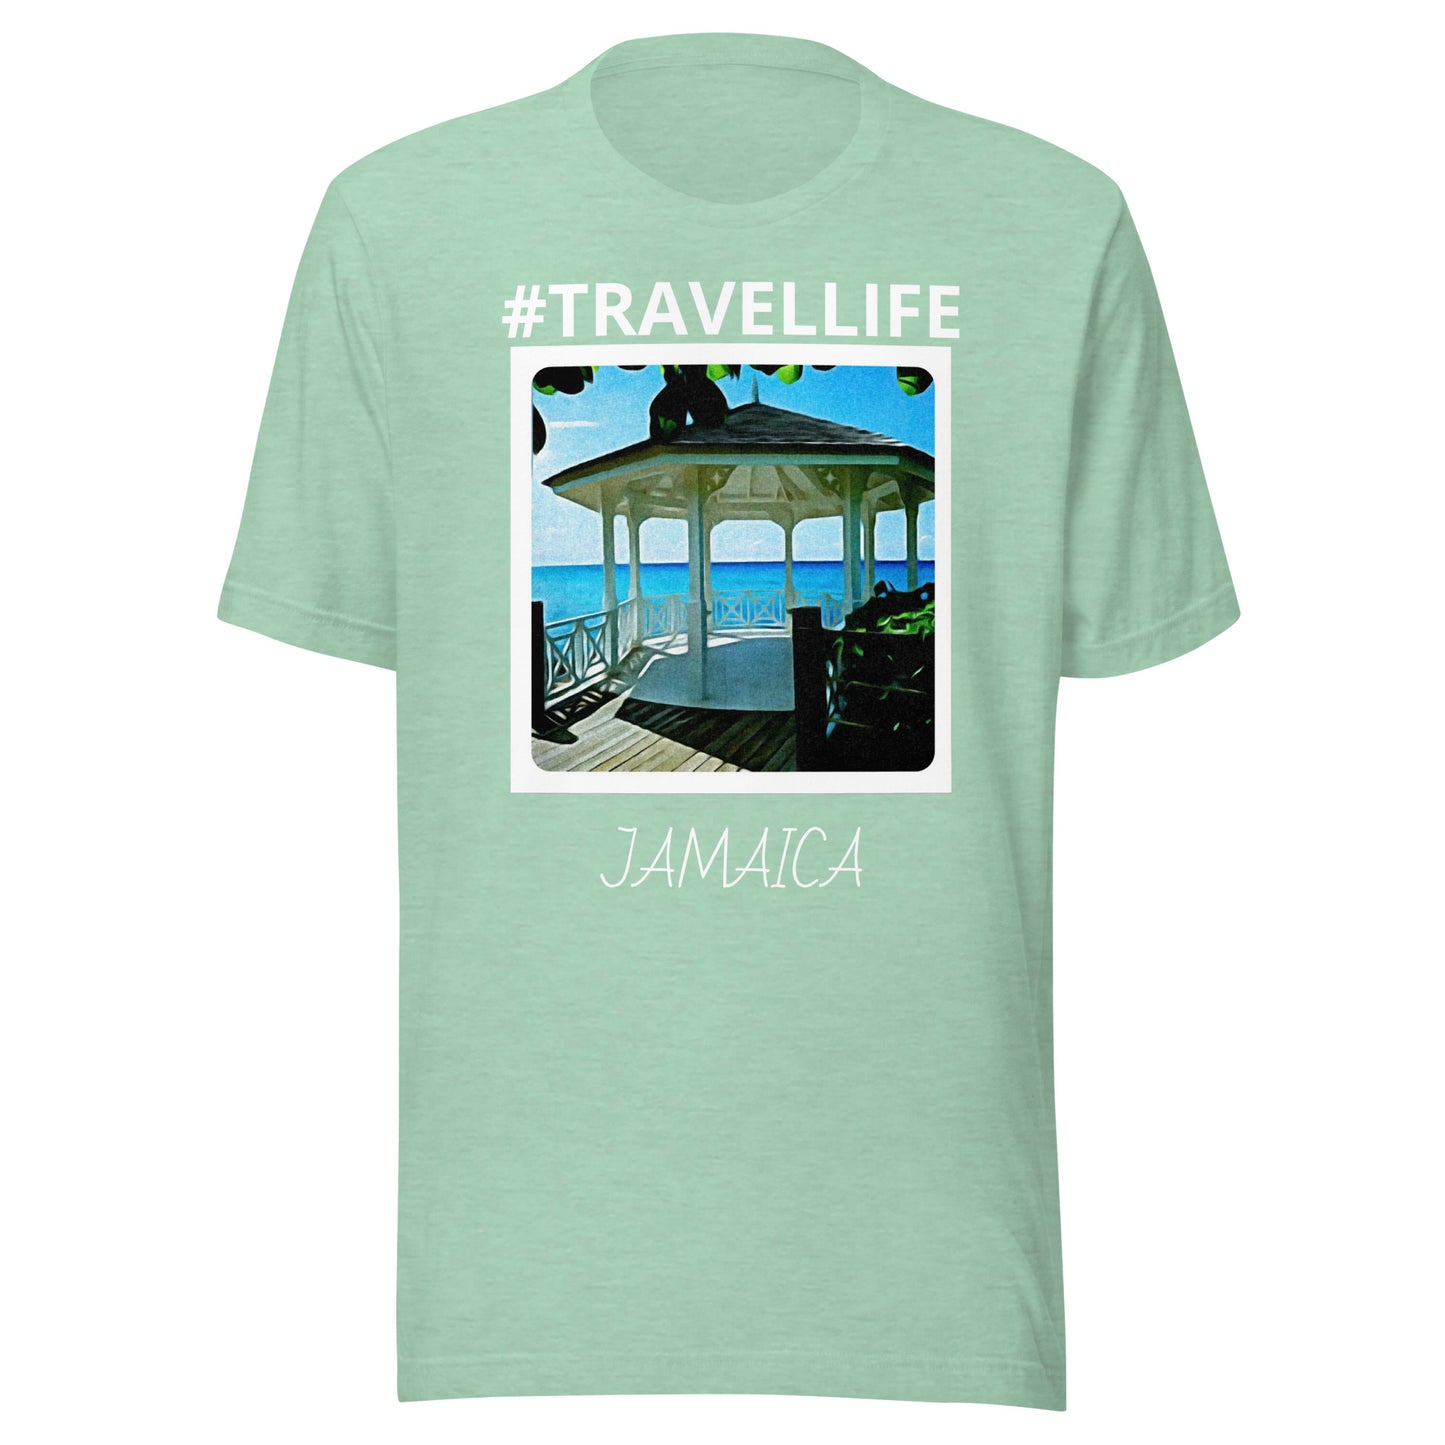 #Travellife Jamaica Beach Gazebo Unisex t-shirt white text